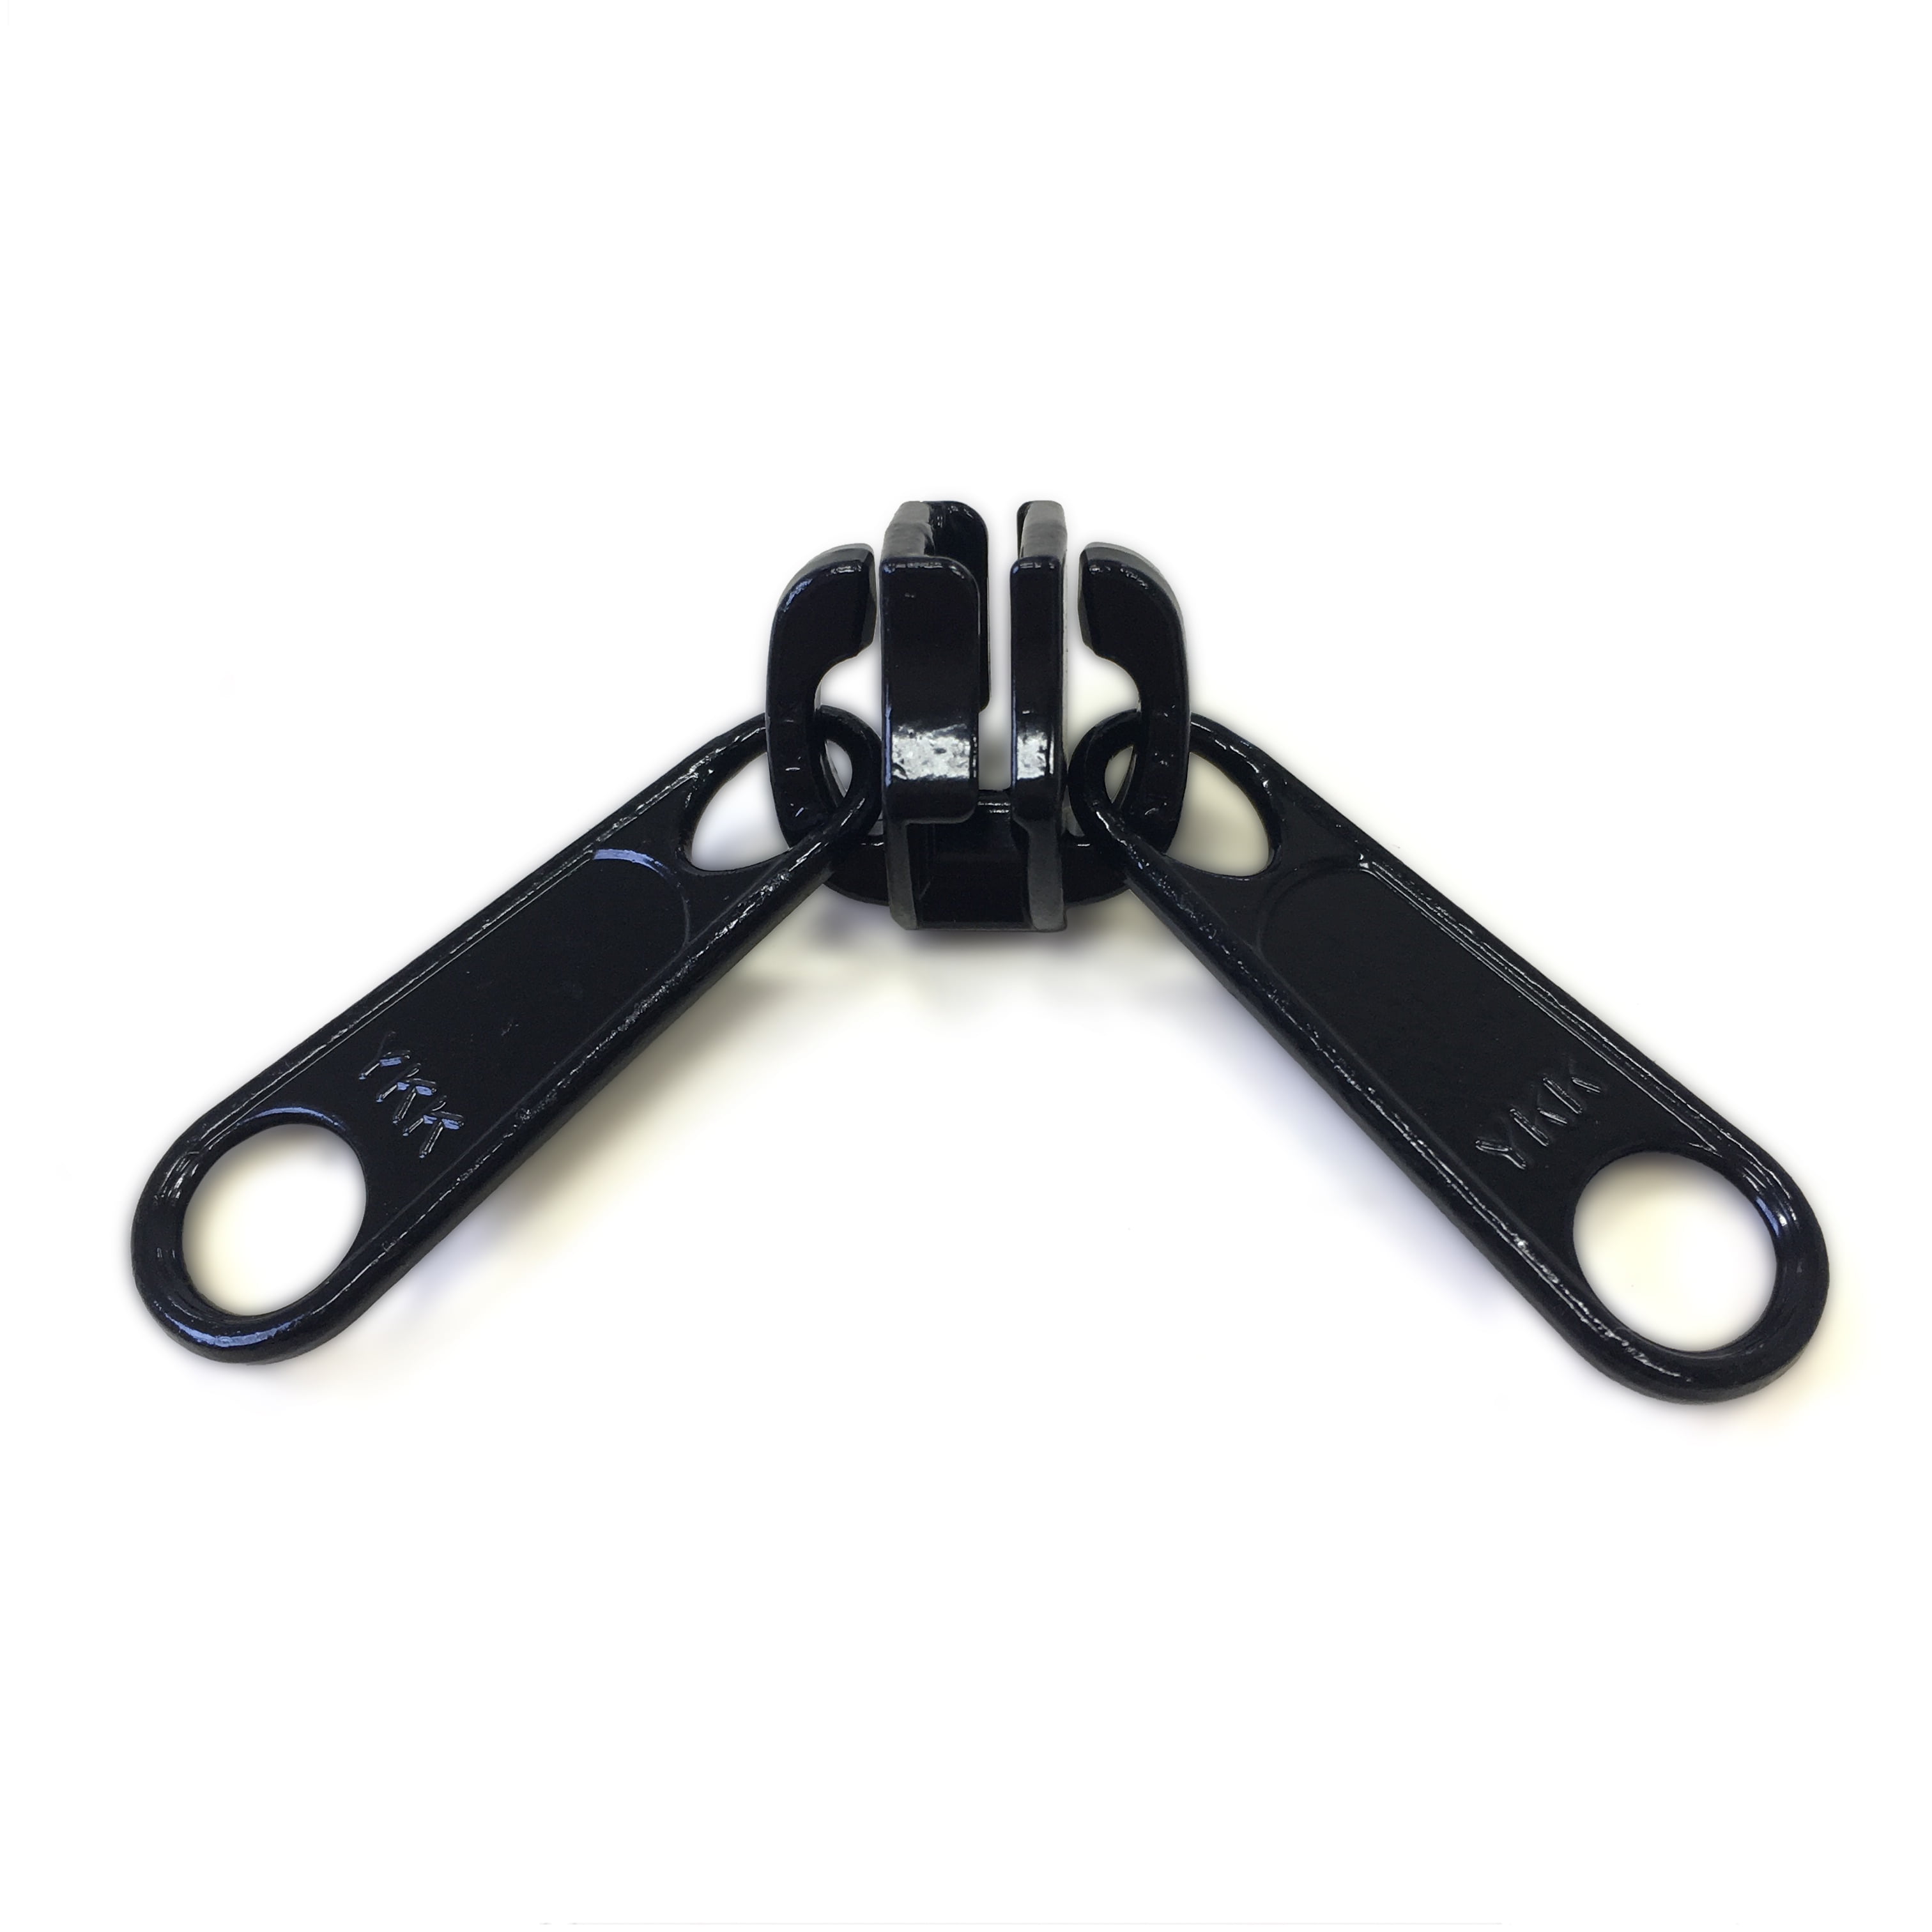 Zipper Sliders YKK or LENZIP #10 Metal Ziplon COIL Non-Locking Double Pull